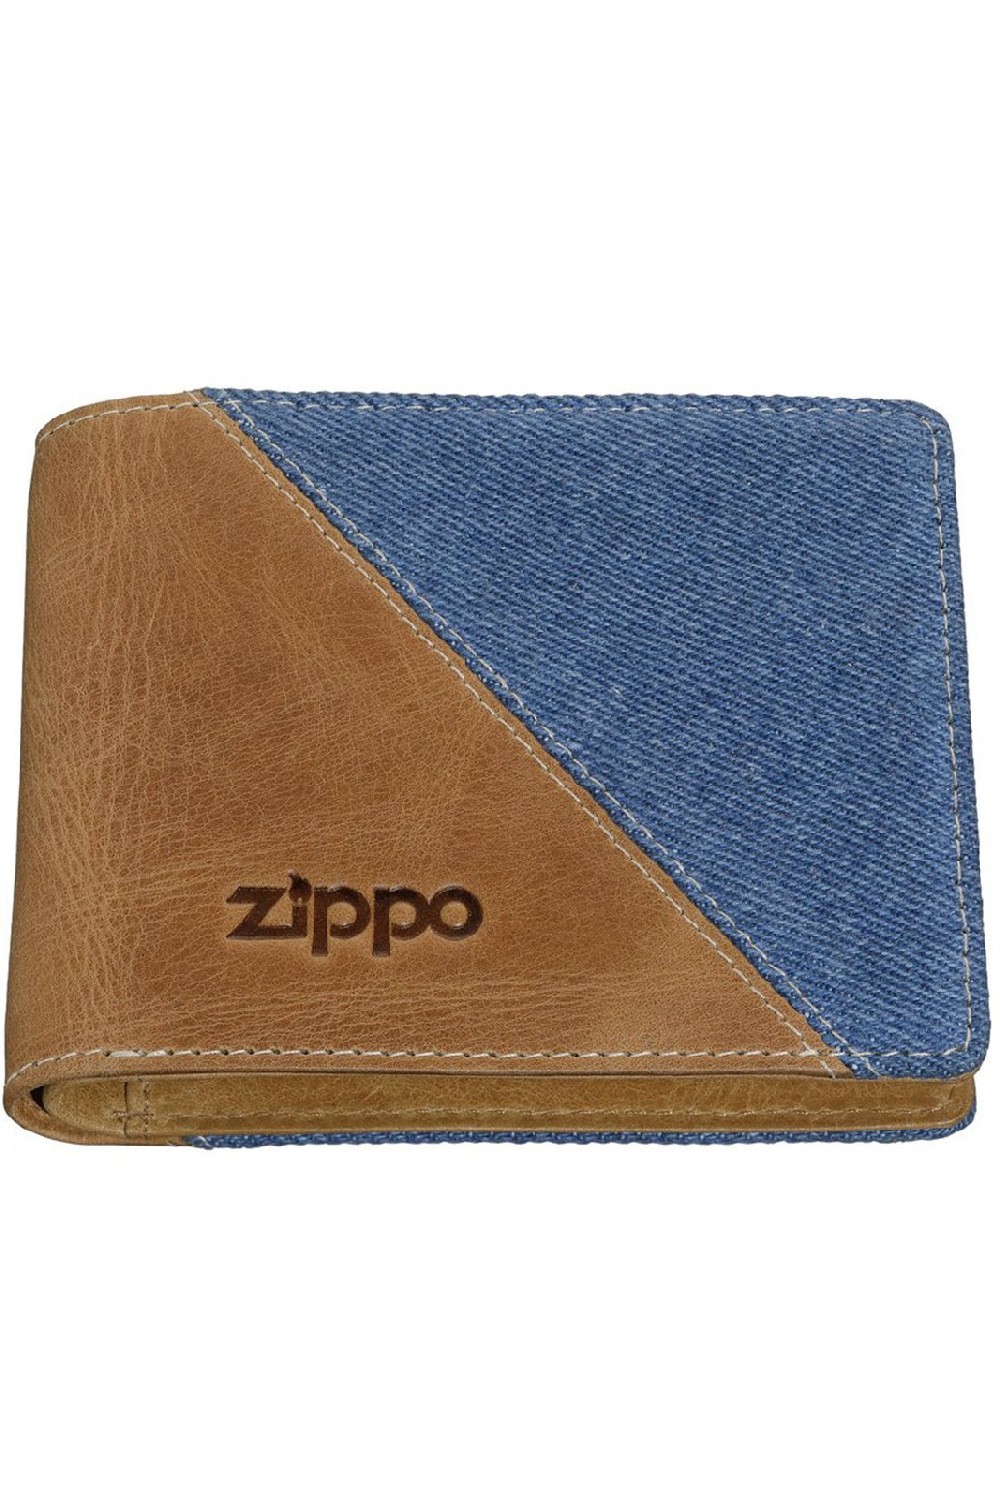 Zippo Denim Credit Card Wallet (2007138)